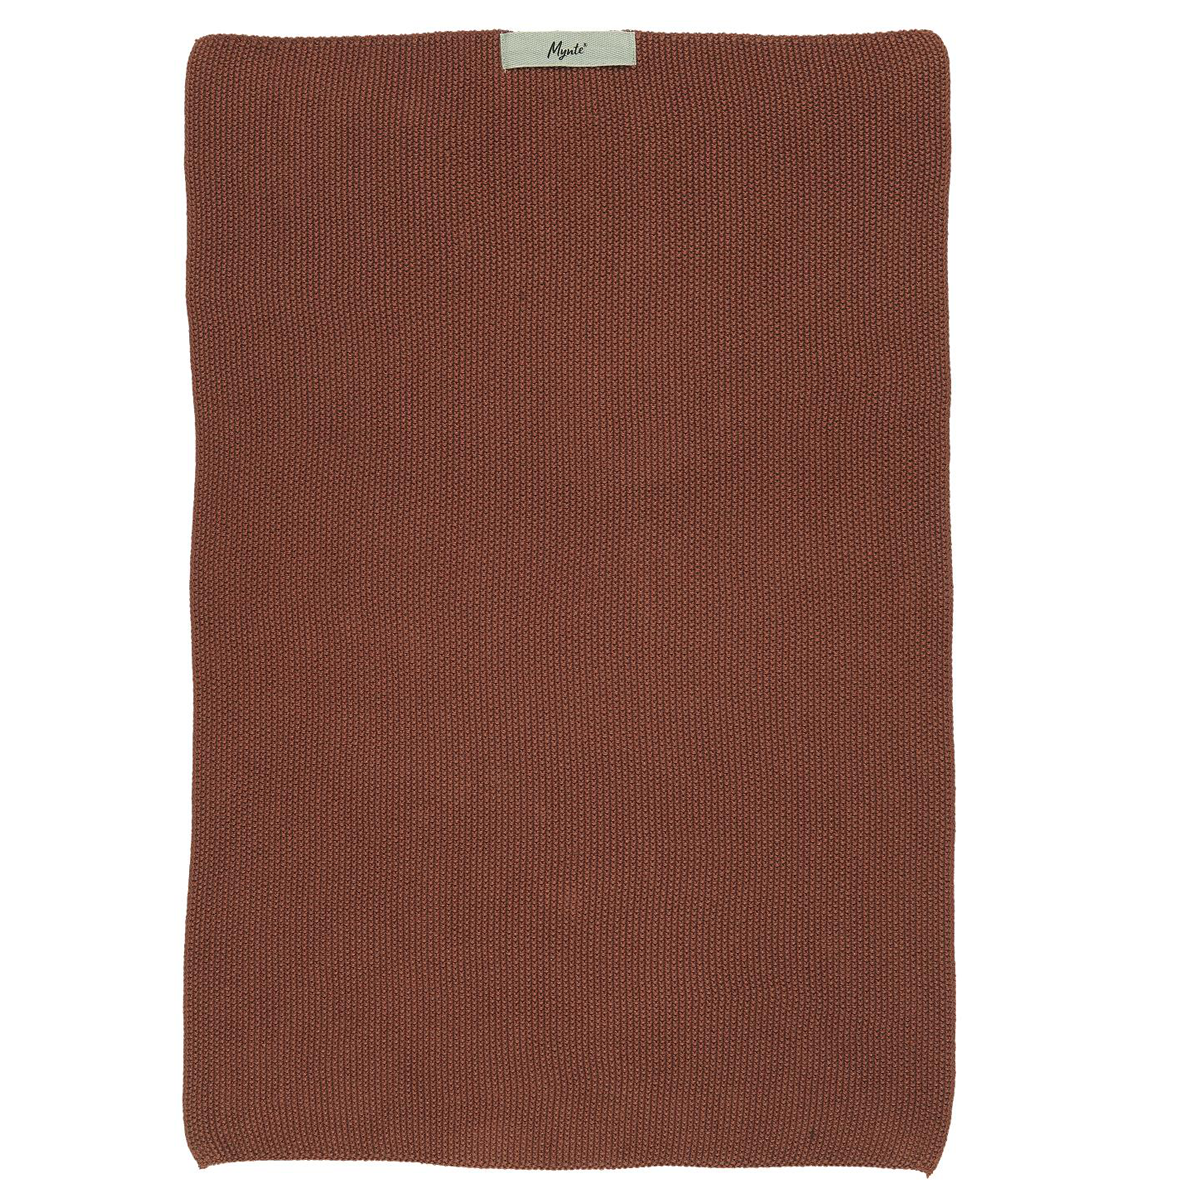 Towel Rustic Brown Knitted